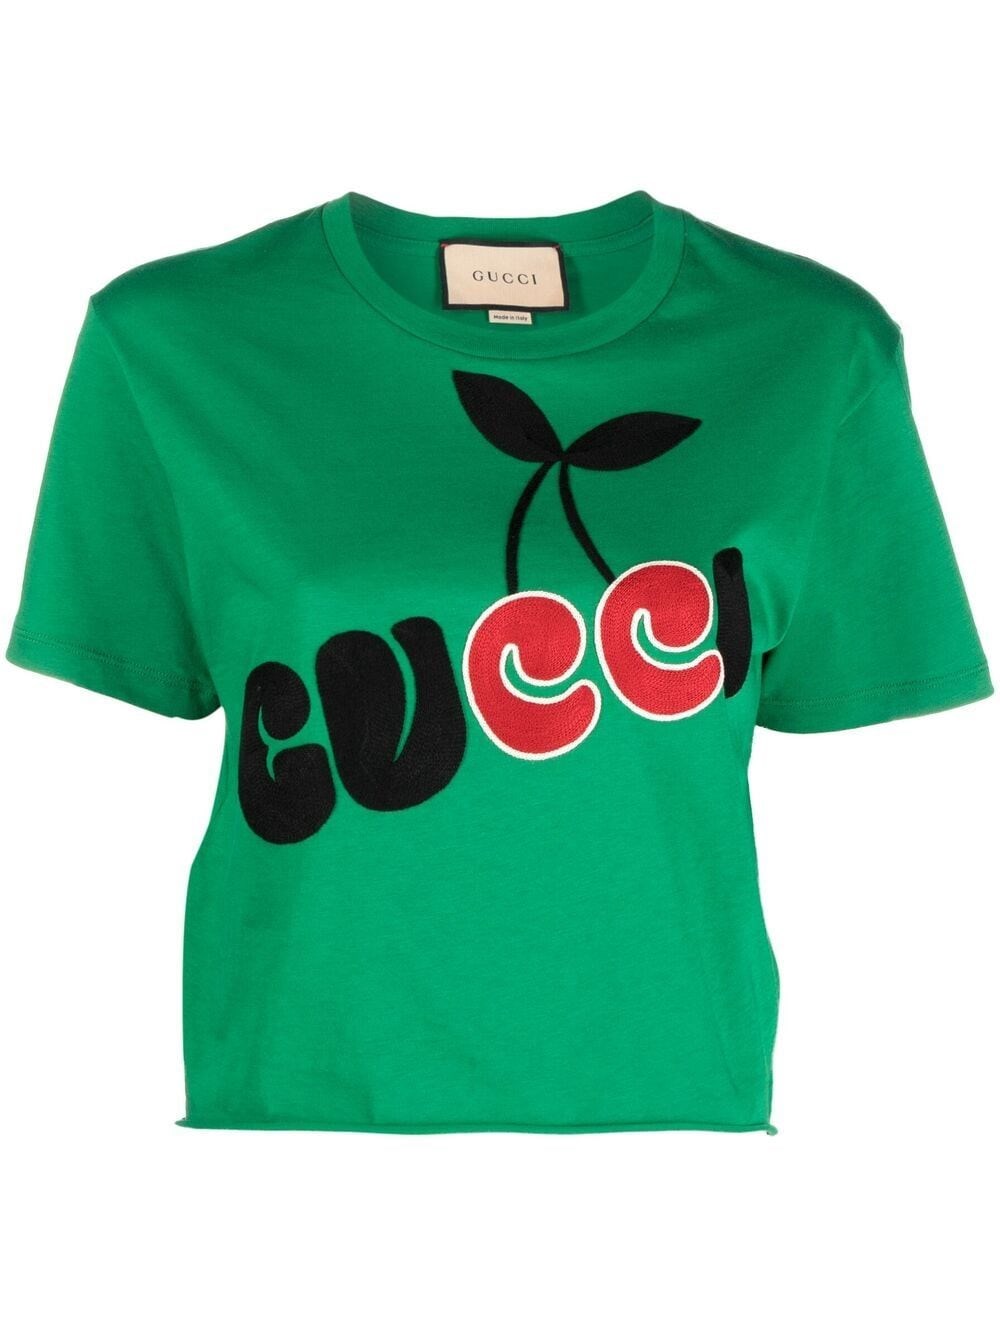 gucci green t shirt